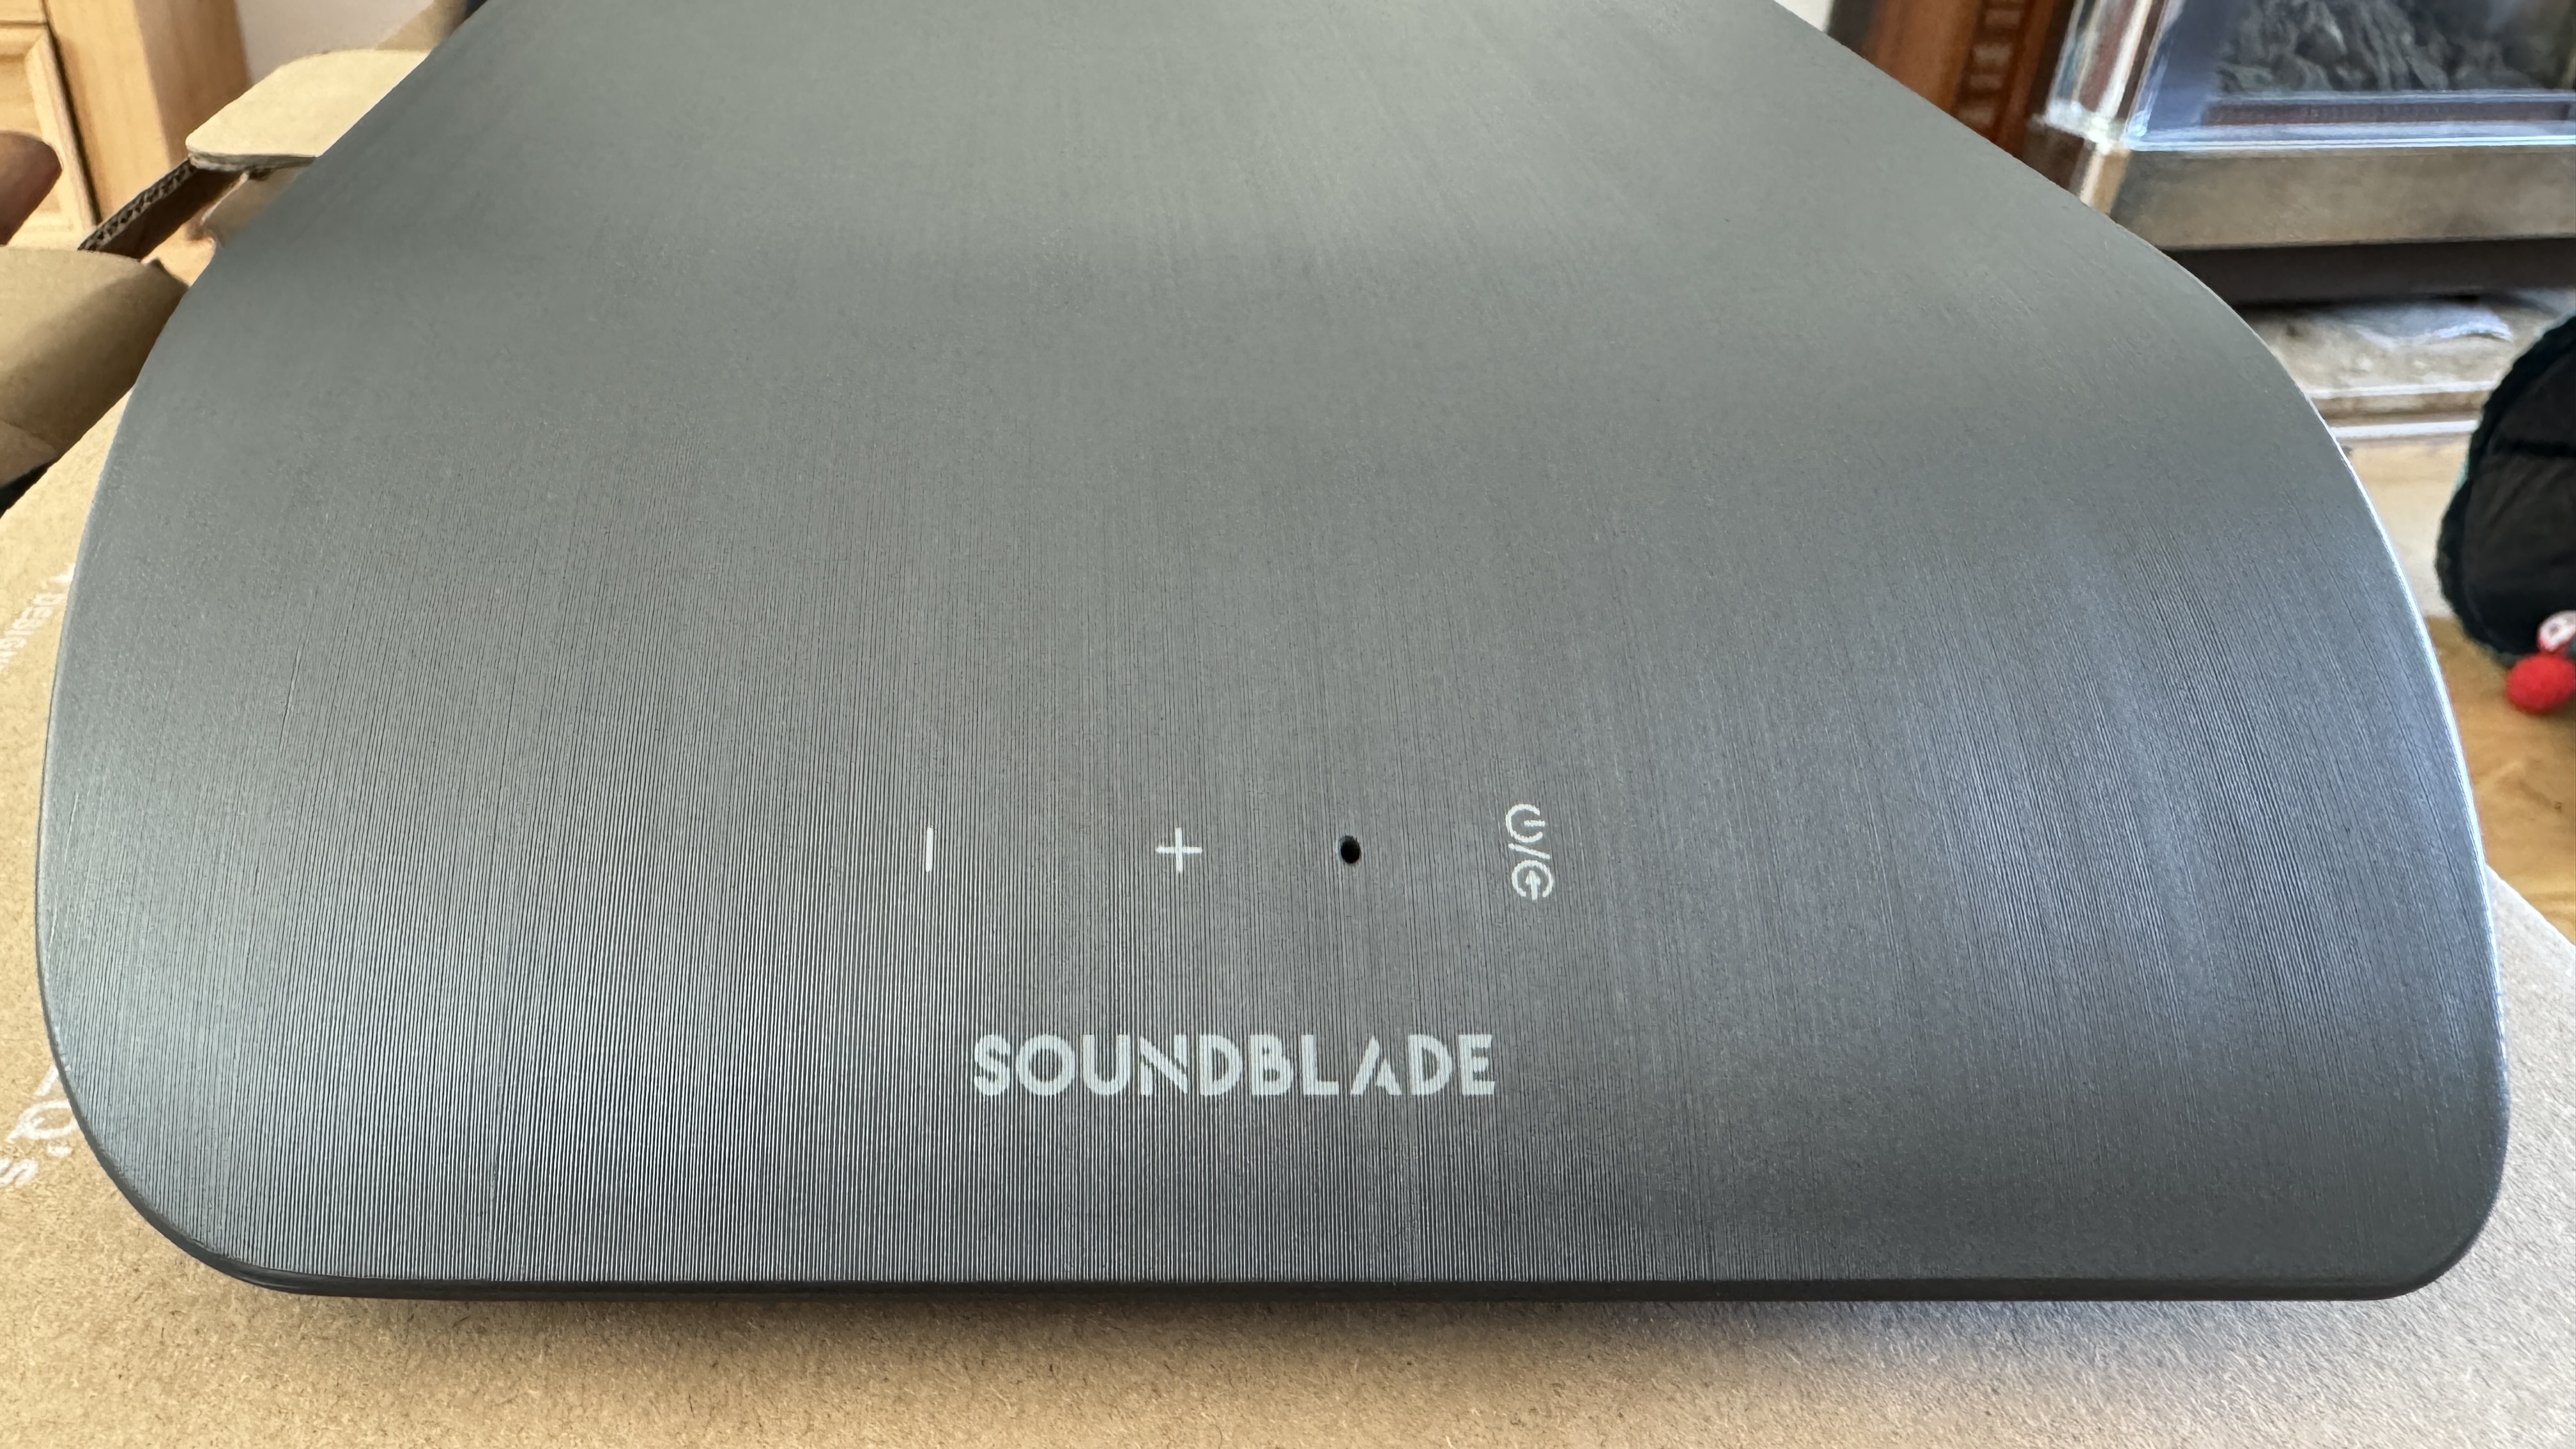 BlueAnt Soundblade set-up on a desk.